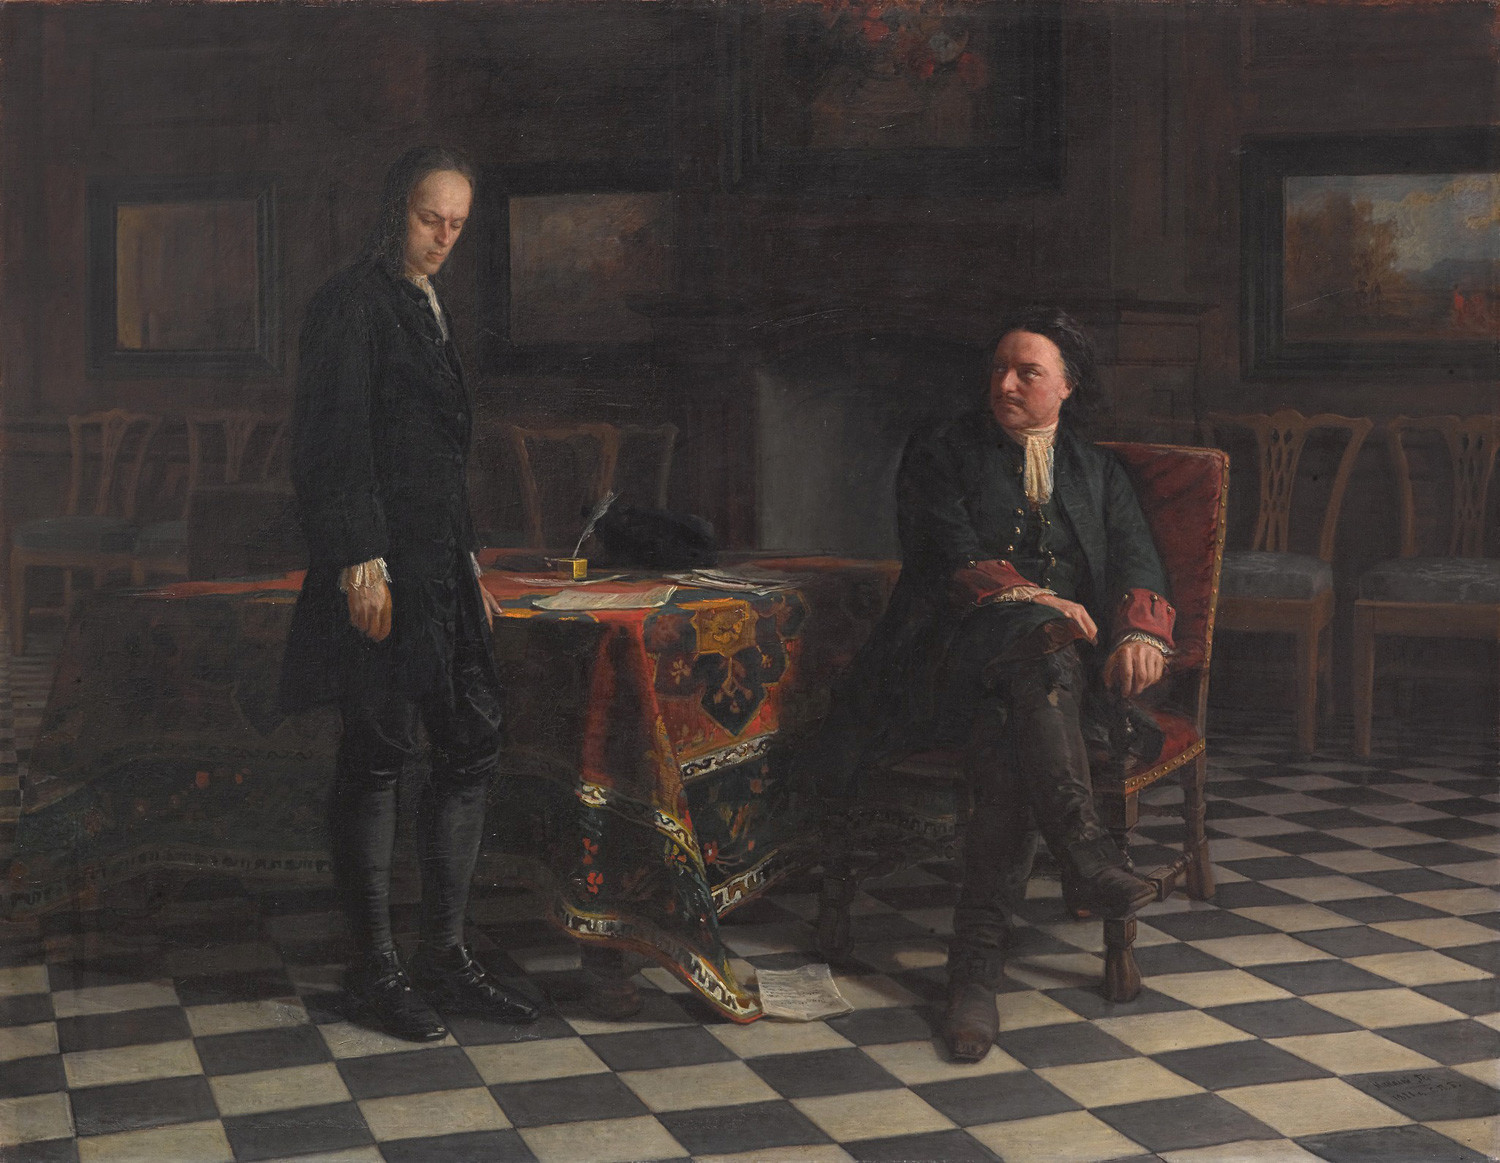 “Pedro, 1º (o Grande) Interrogando Tsarévitch Aleksêi Petrovitch em Peterhof’, de Nikolai Ge